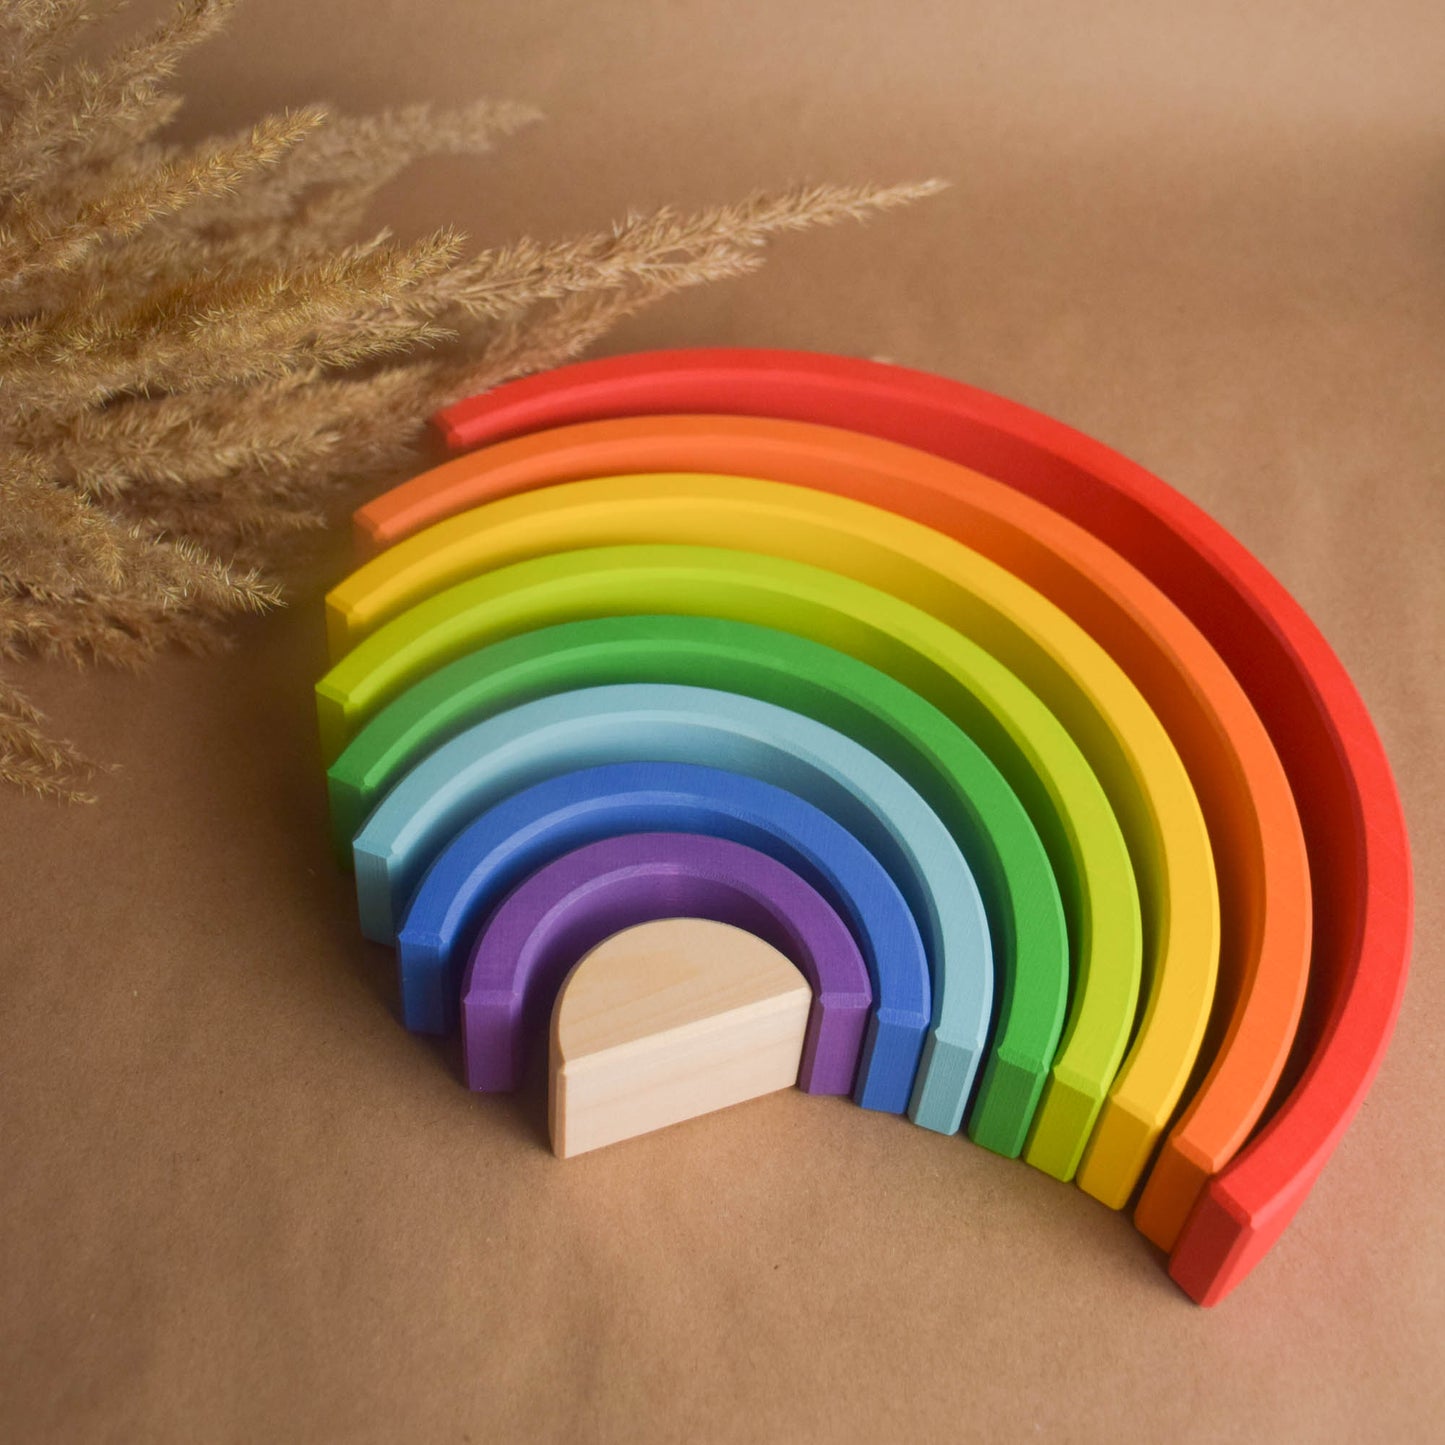 Montessori Wooden Rainbow Stacker Toy 9 pc.